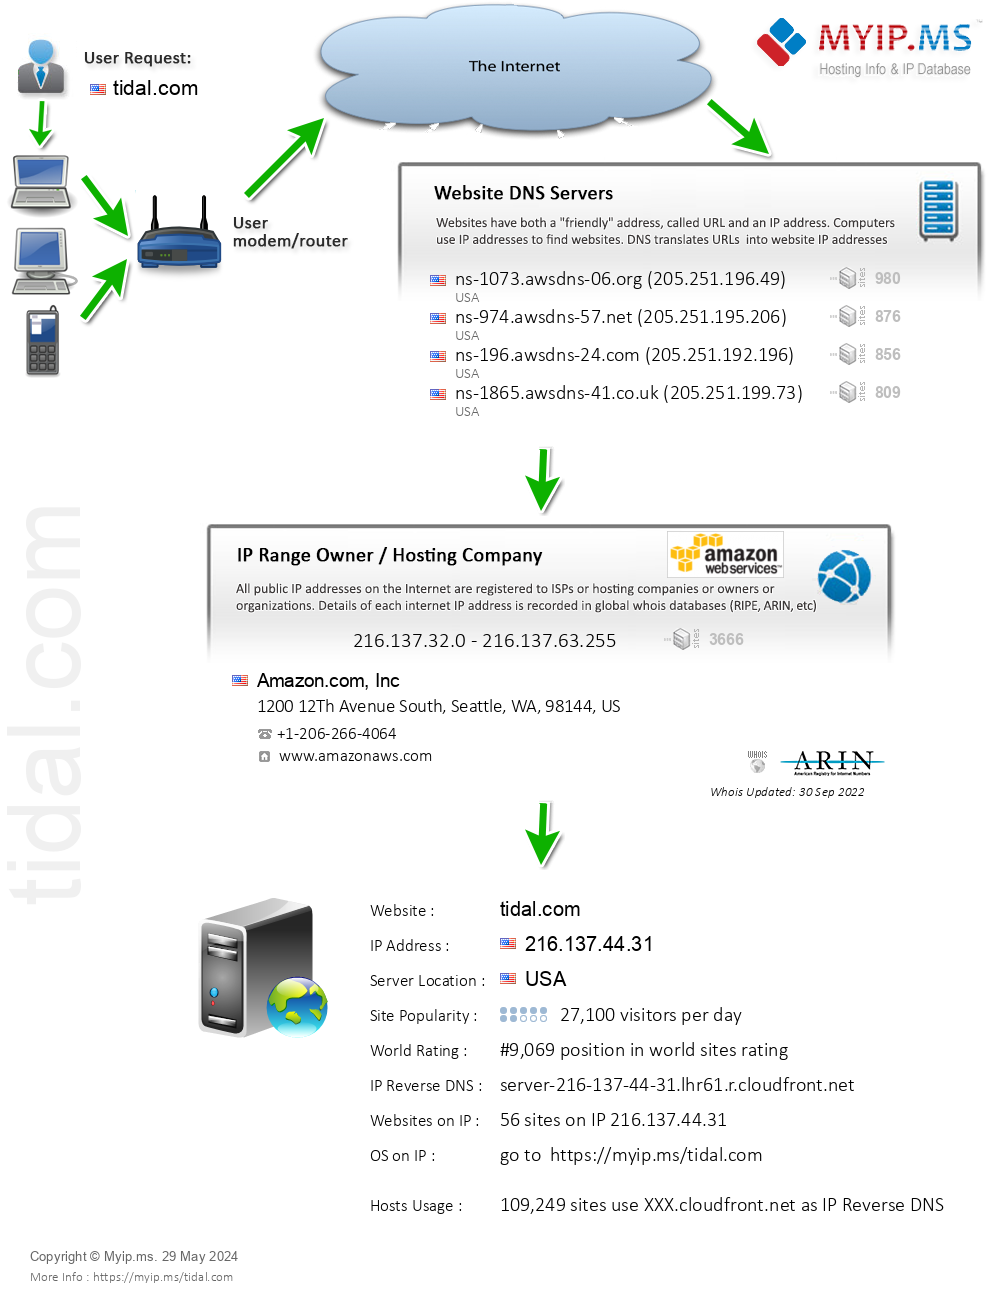 Tidal.com - Website Hosting Visual IP Diagram